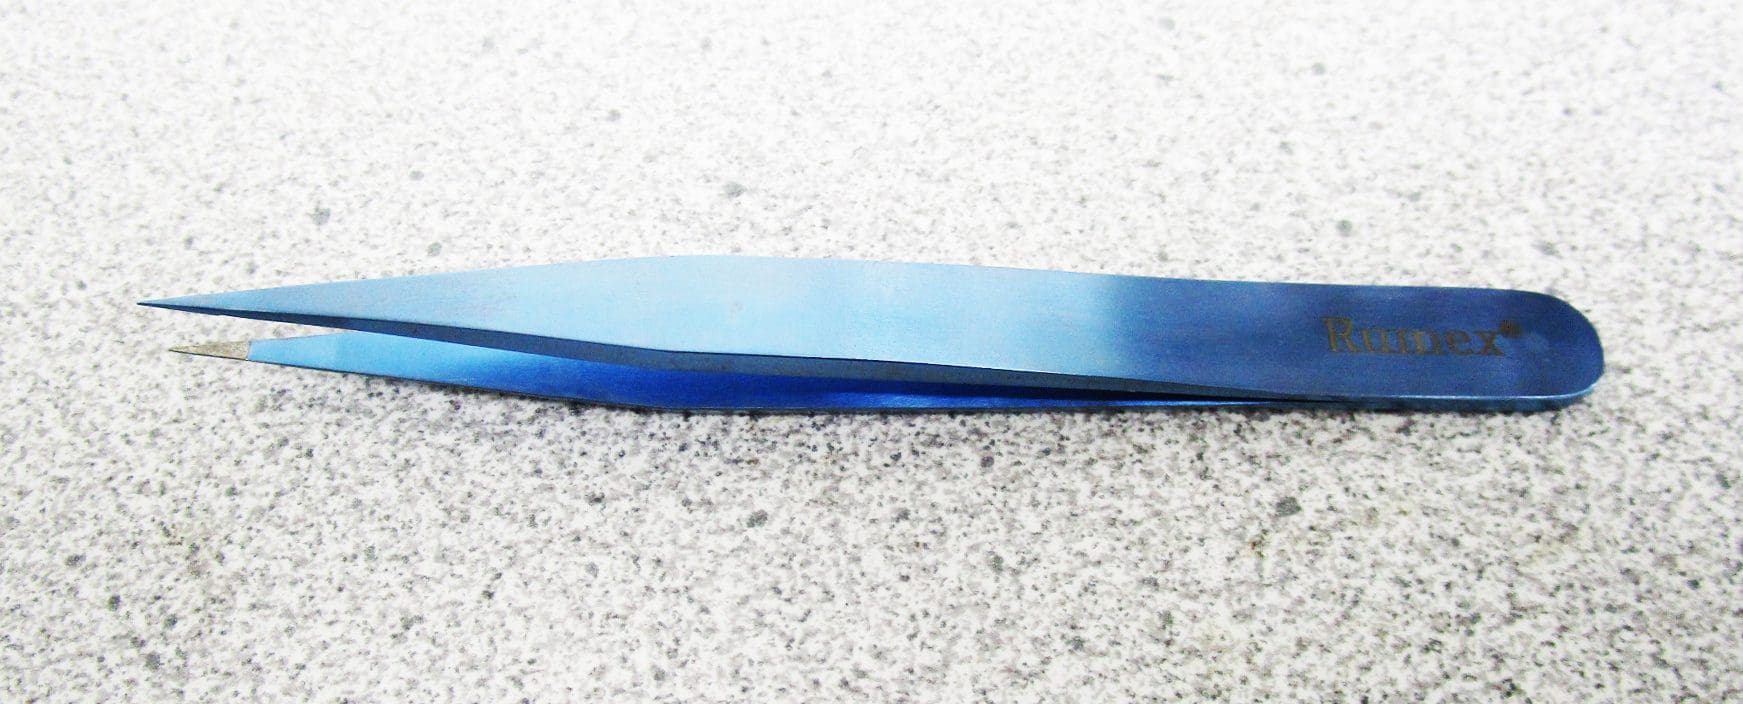 A blue metal tweezer sitting on the ground.